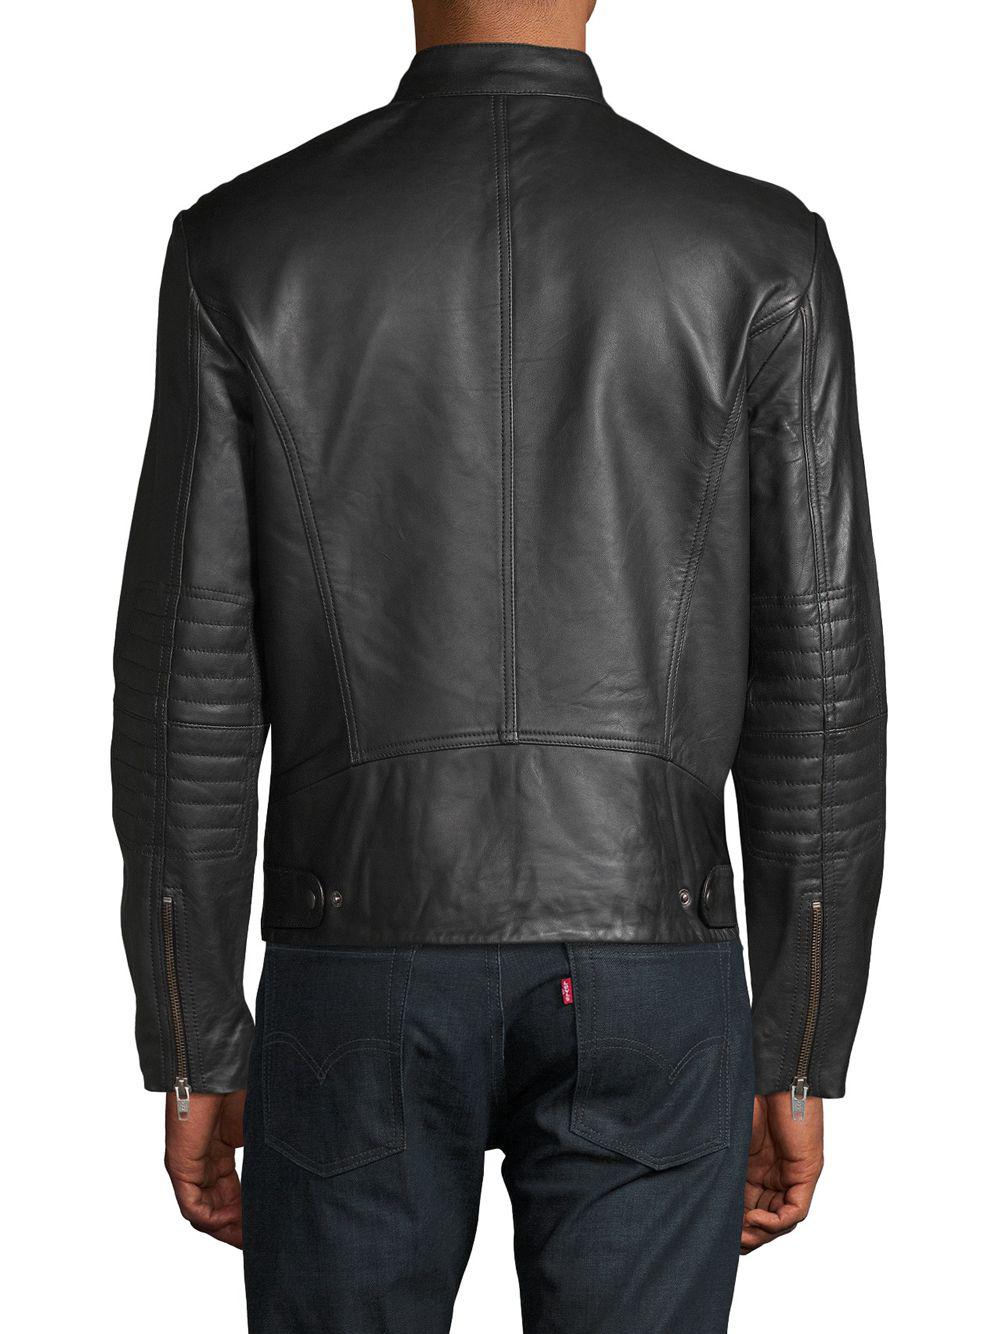 Saks Fifth Avenue Full-zip Leather Biker Jacket in Black for Men - Lyst